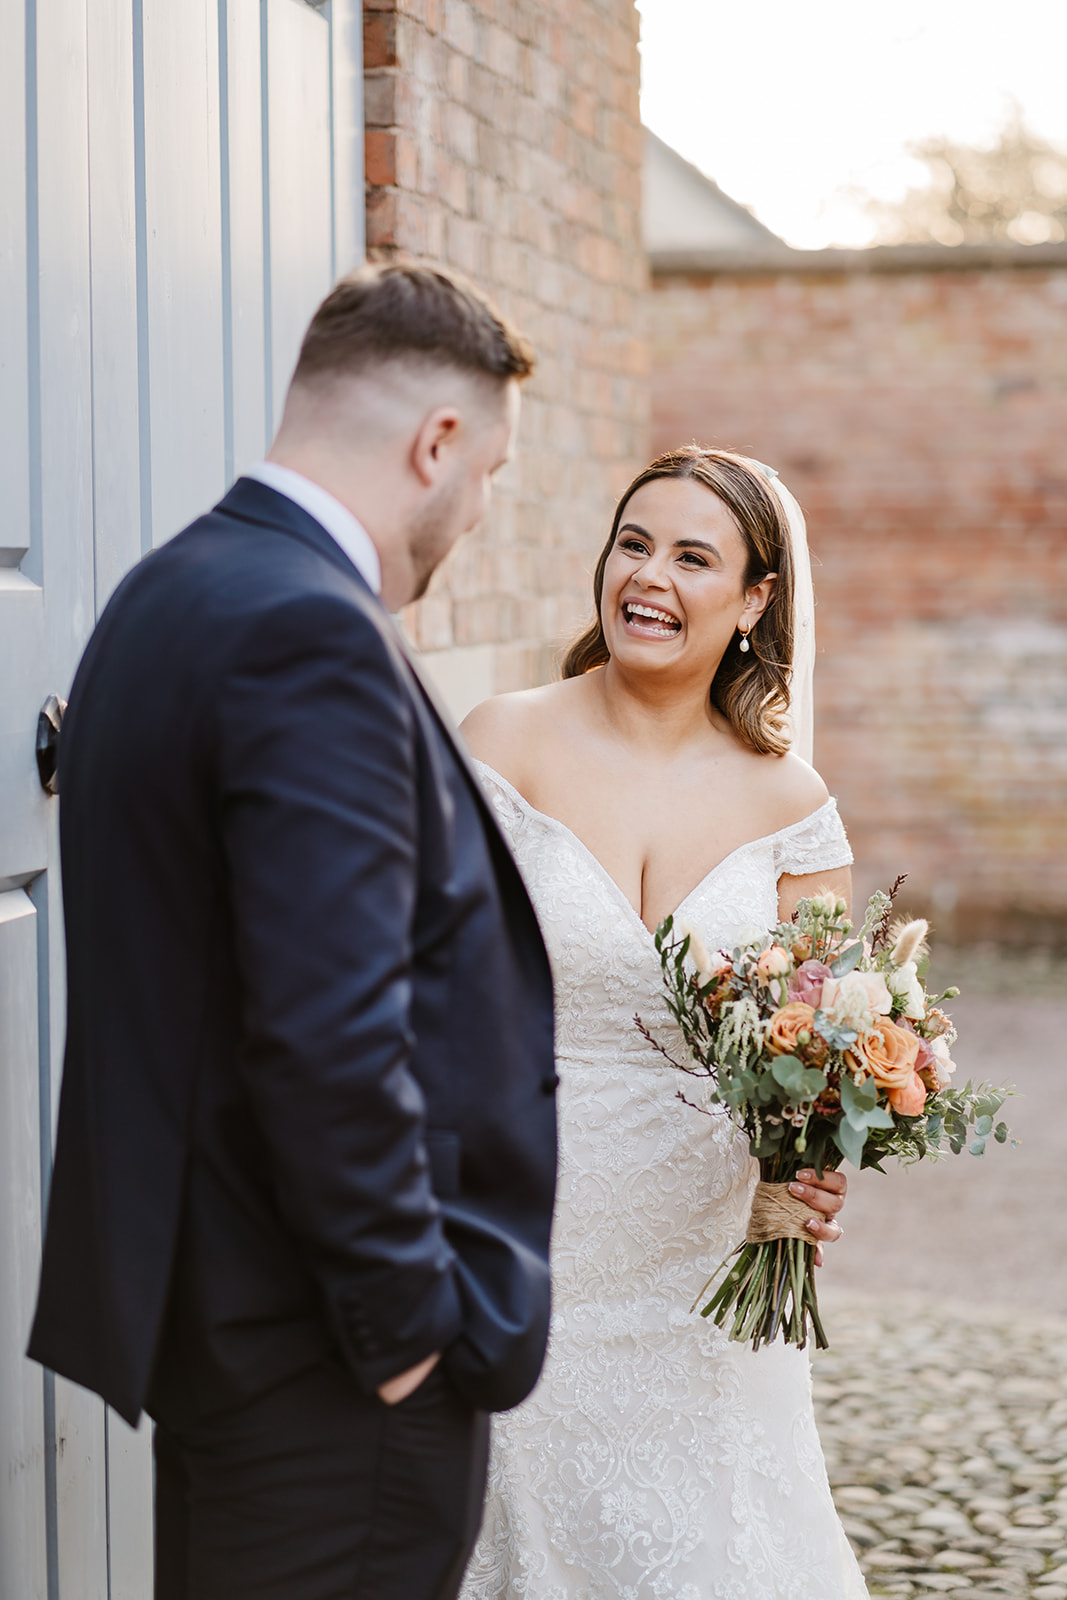 Bride and groom laughing by door